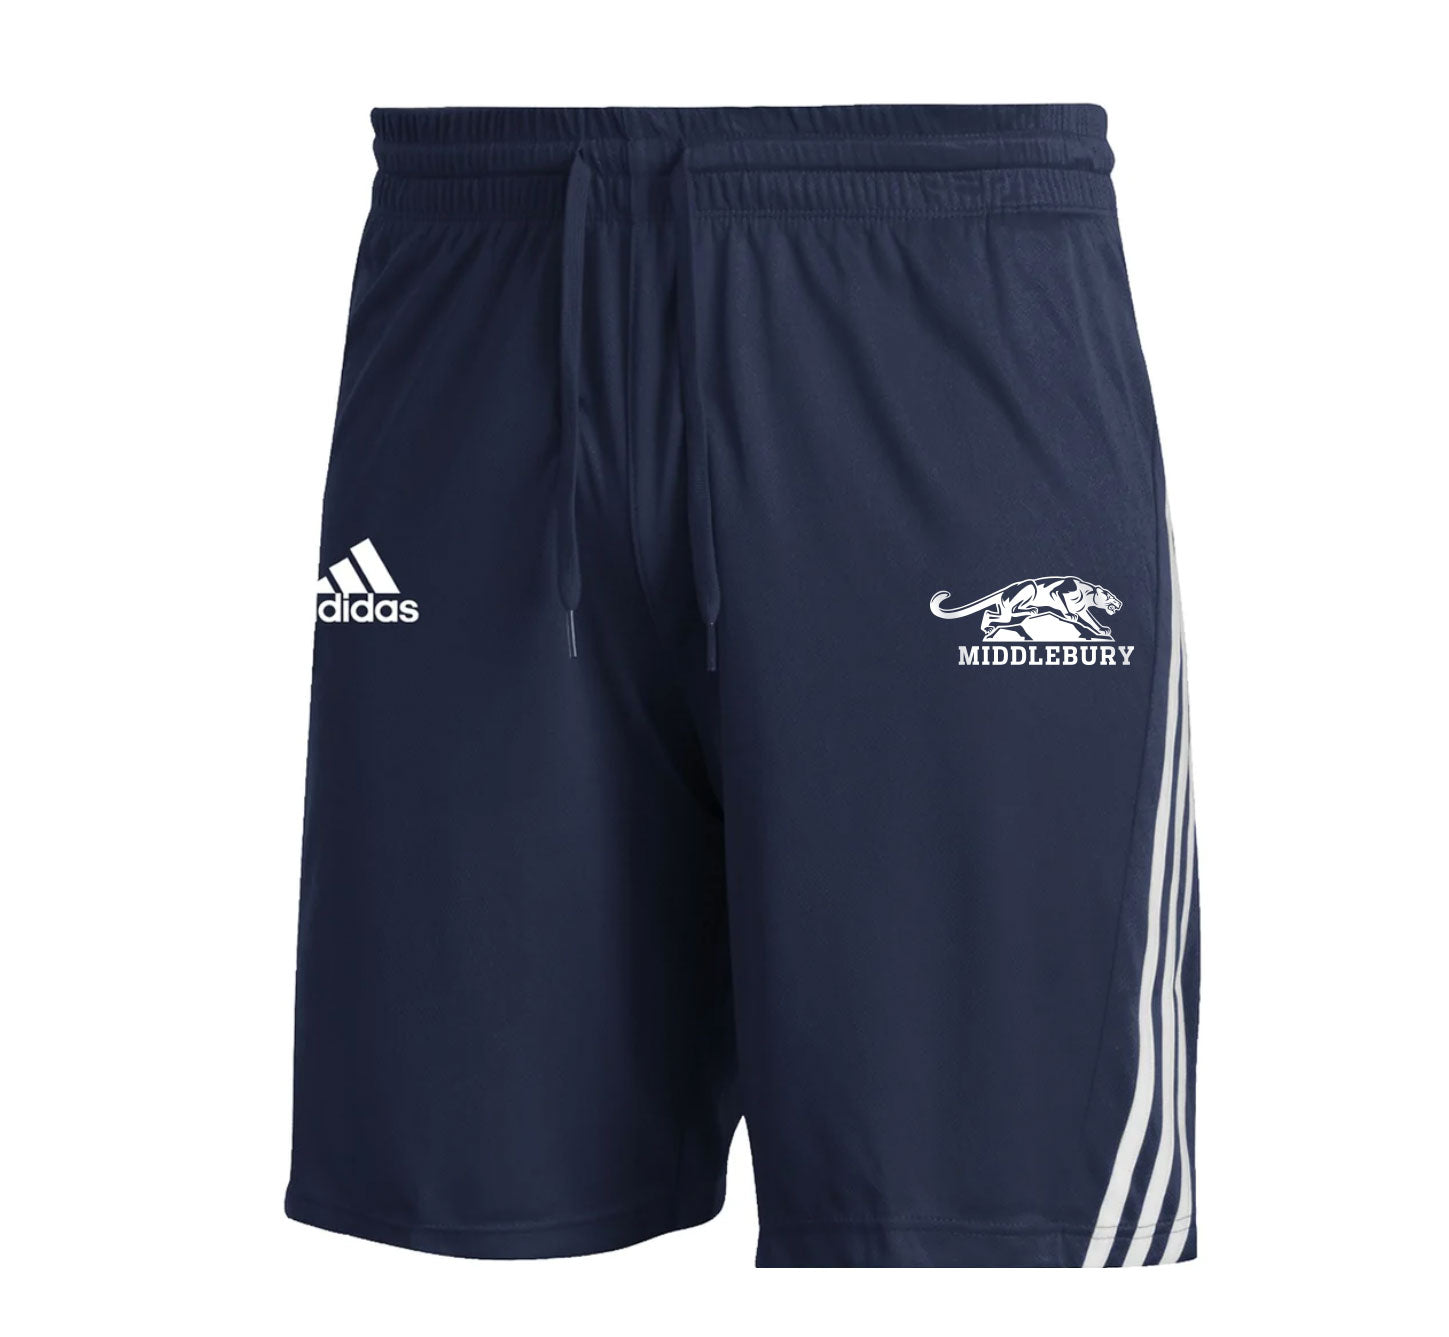 Middlebury Adidas Mens Short (3-Stripe)